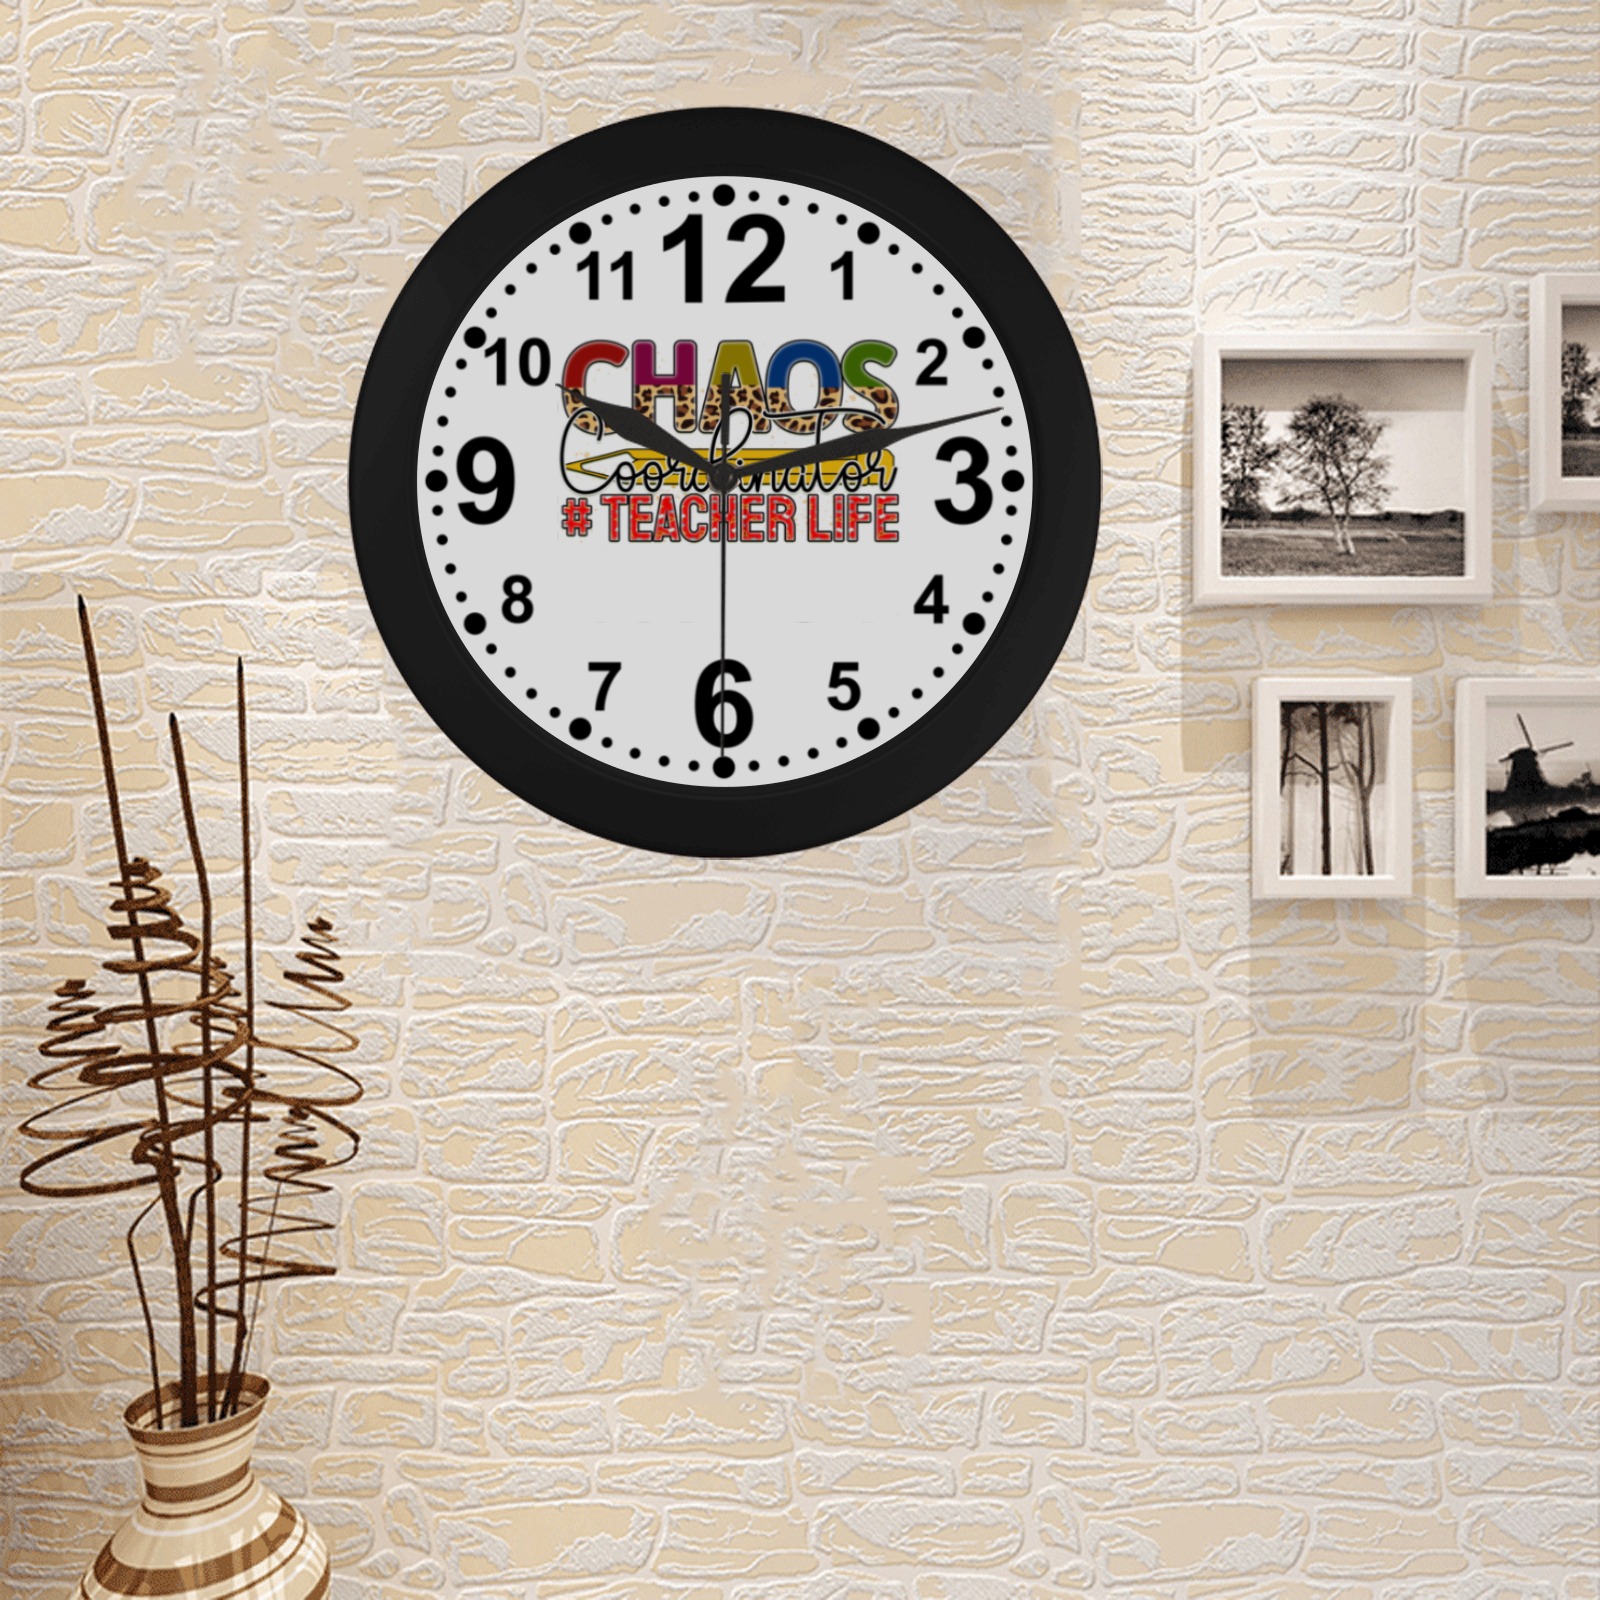 Chaos Coordinator #Teacherlife Circular Plastic Wall clock